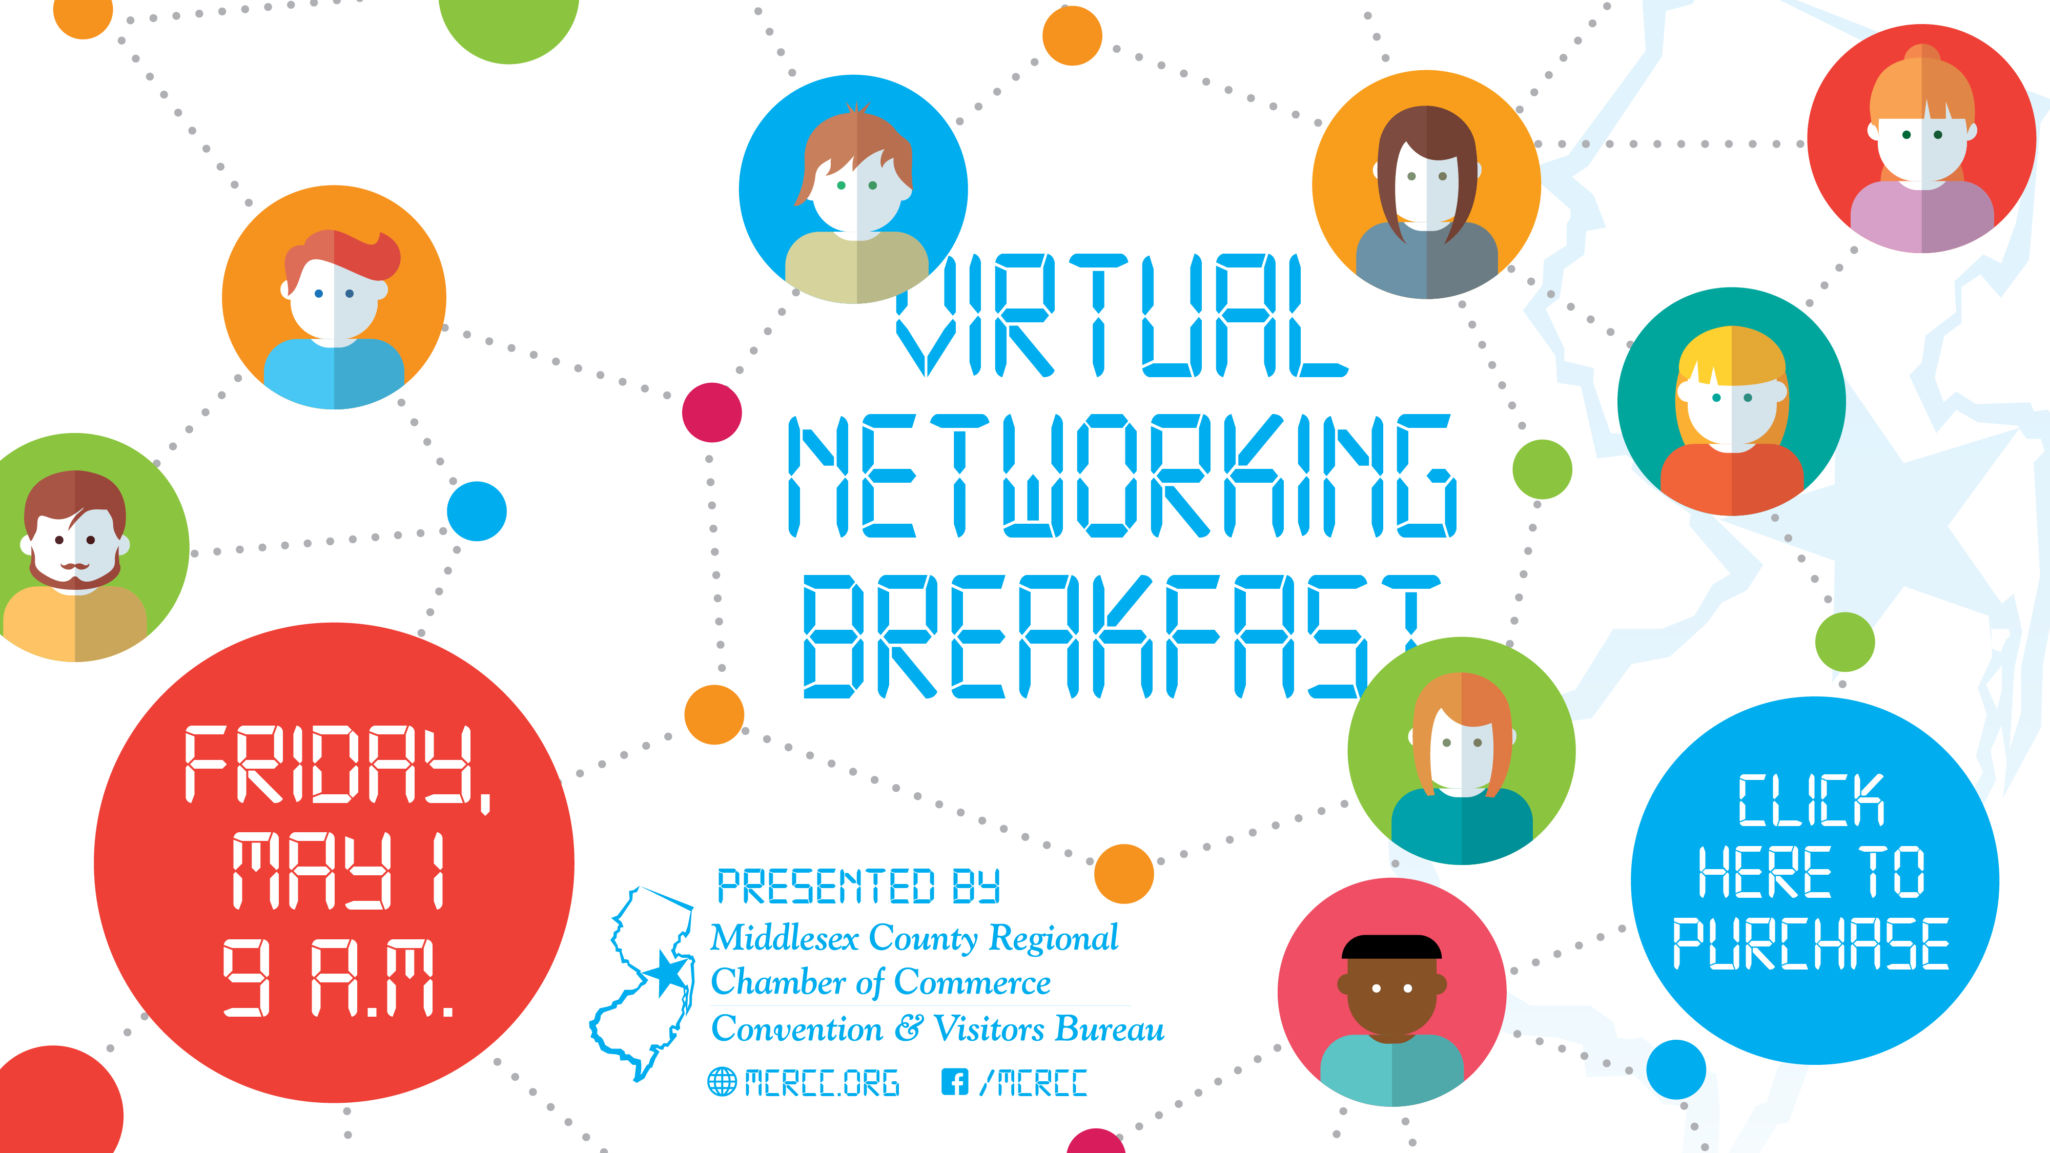 May 1st Virtual Networking Breakfast